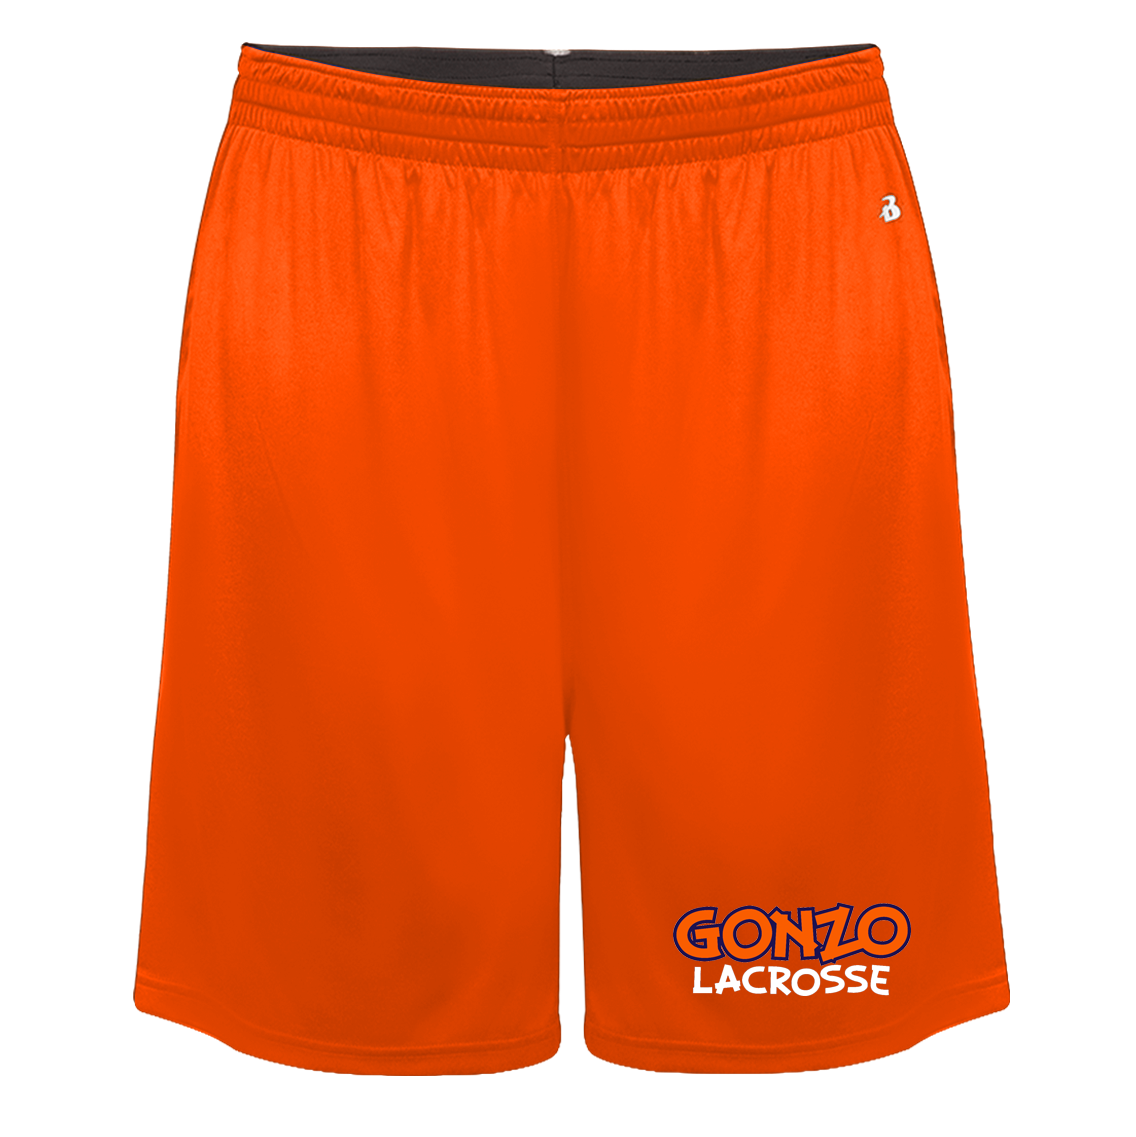 Gonzo Lacrosse Ultimate Softlock Short